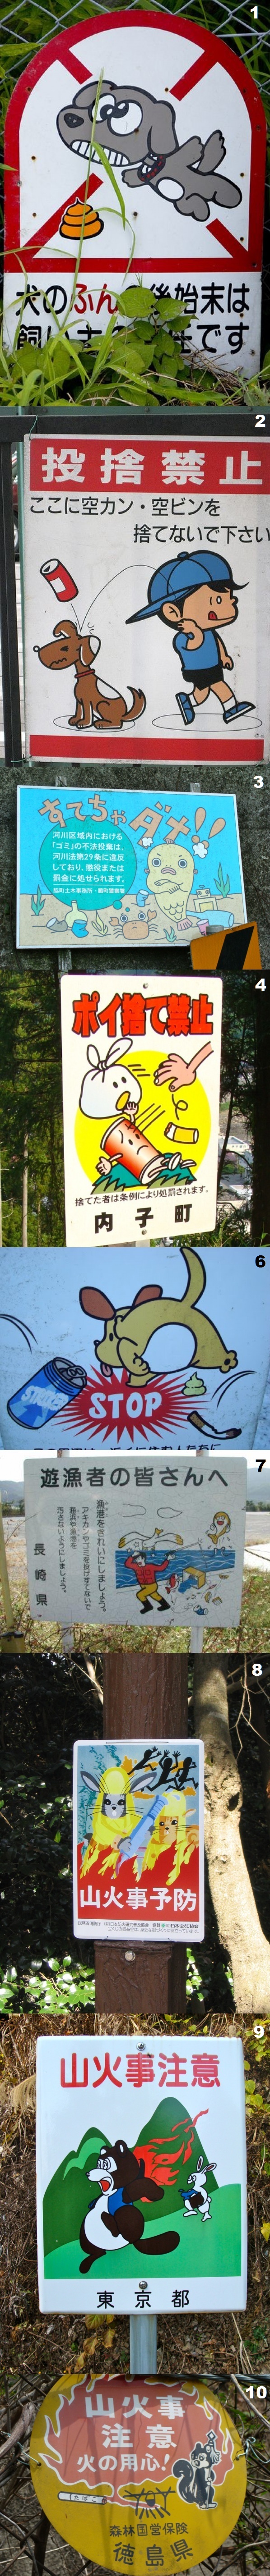 N-trash-and-fire-japanese-warnings